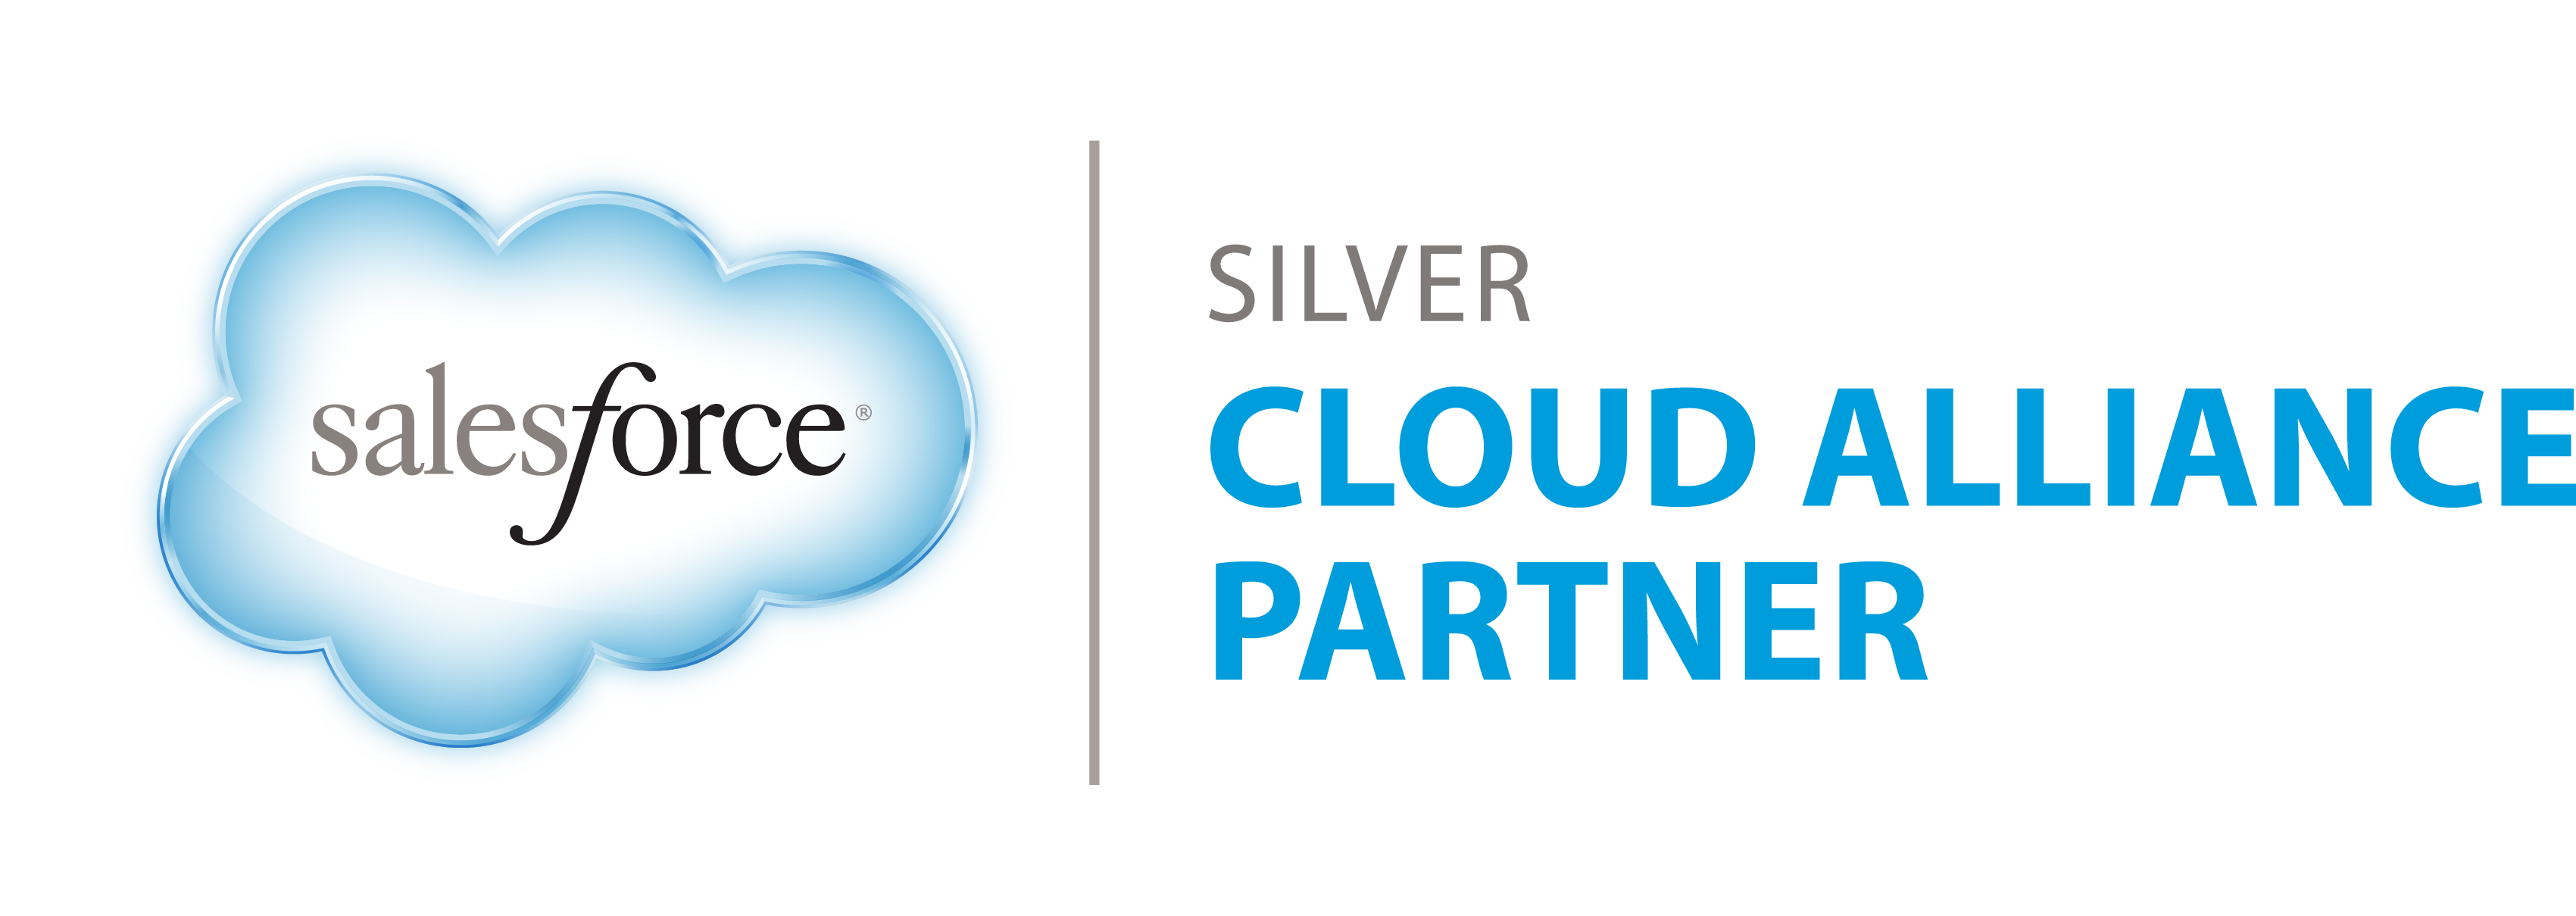 Salesforce Silver Cloud Alliance Partner